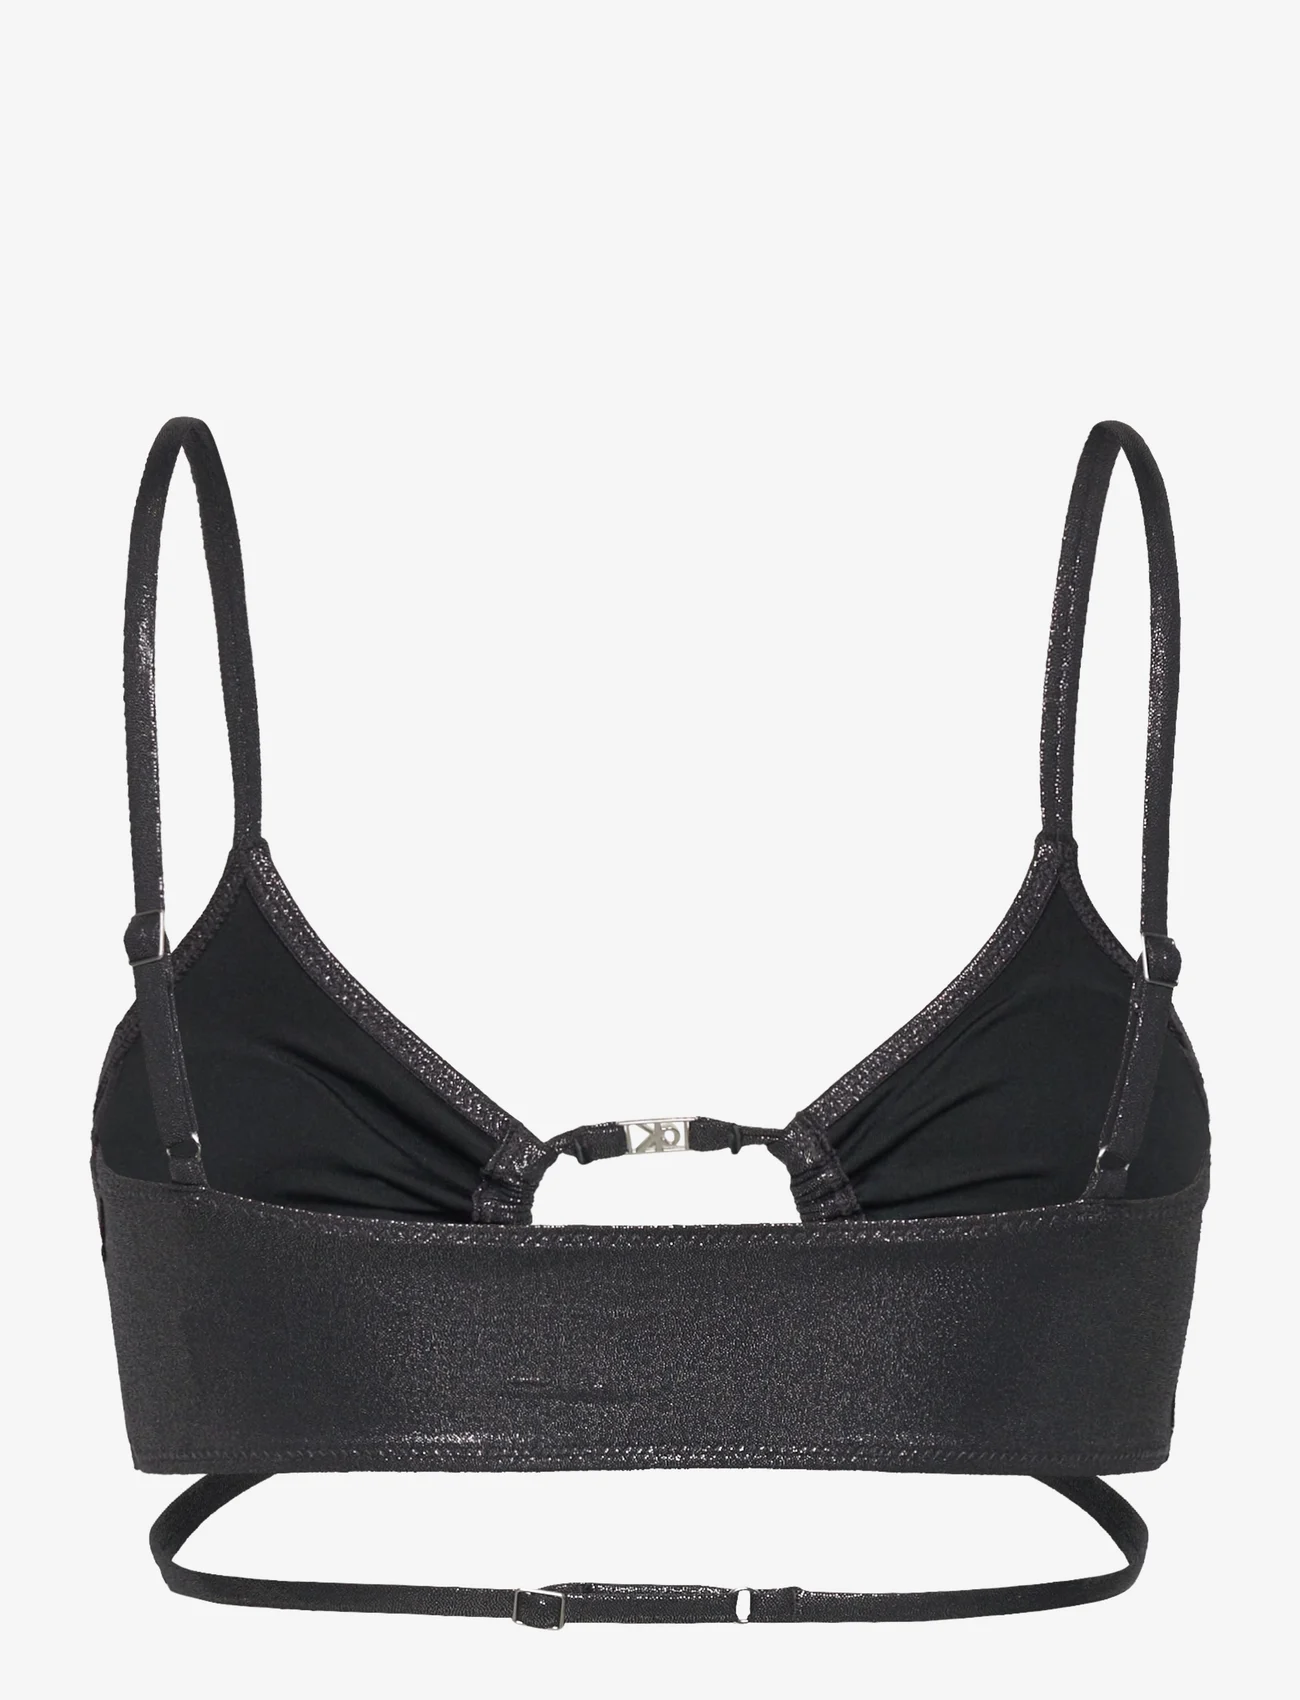 Calvin Klein - BRALETTE-RP - trīsstūra bikini augšiņa - pvh black - 1